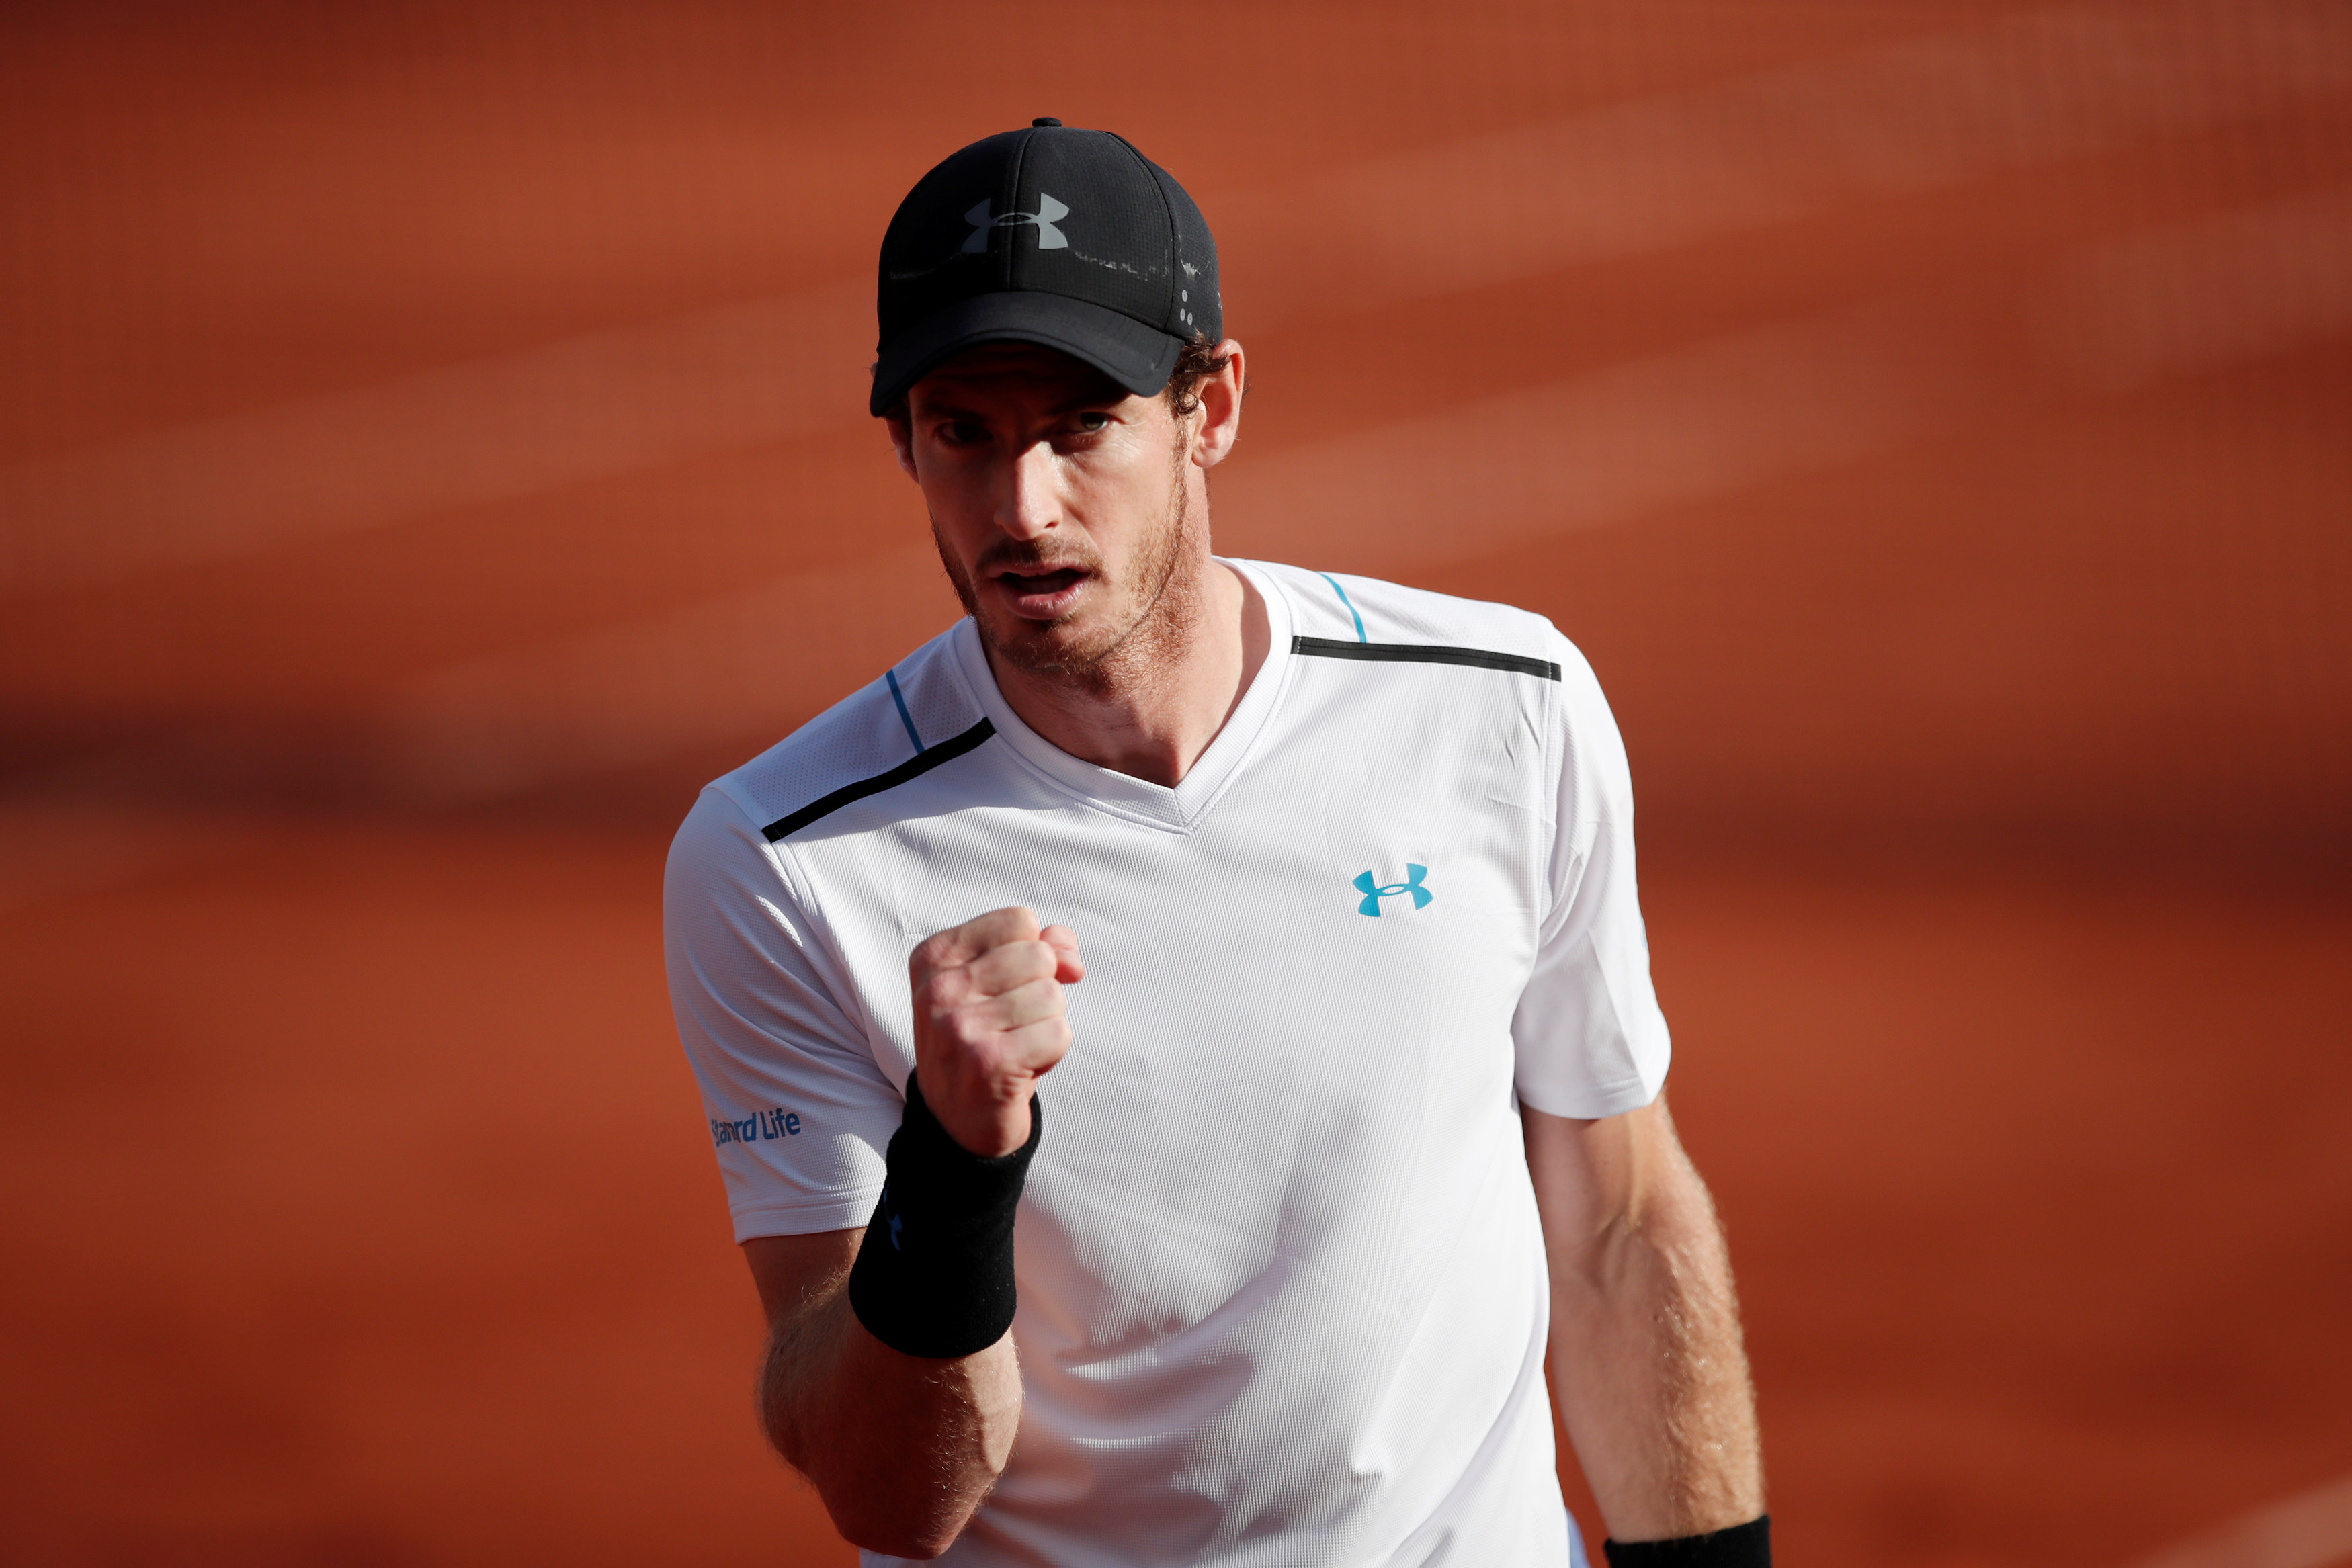 Tennis: Andy Murray tames Nishikori to enter semifinals